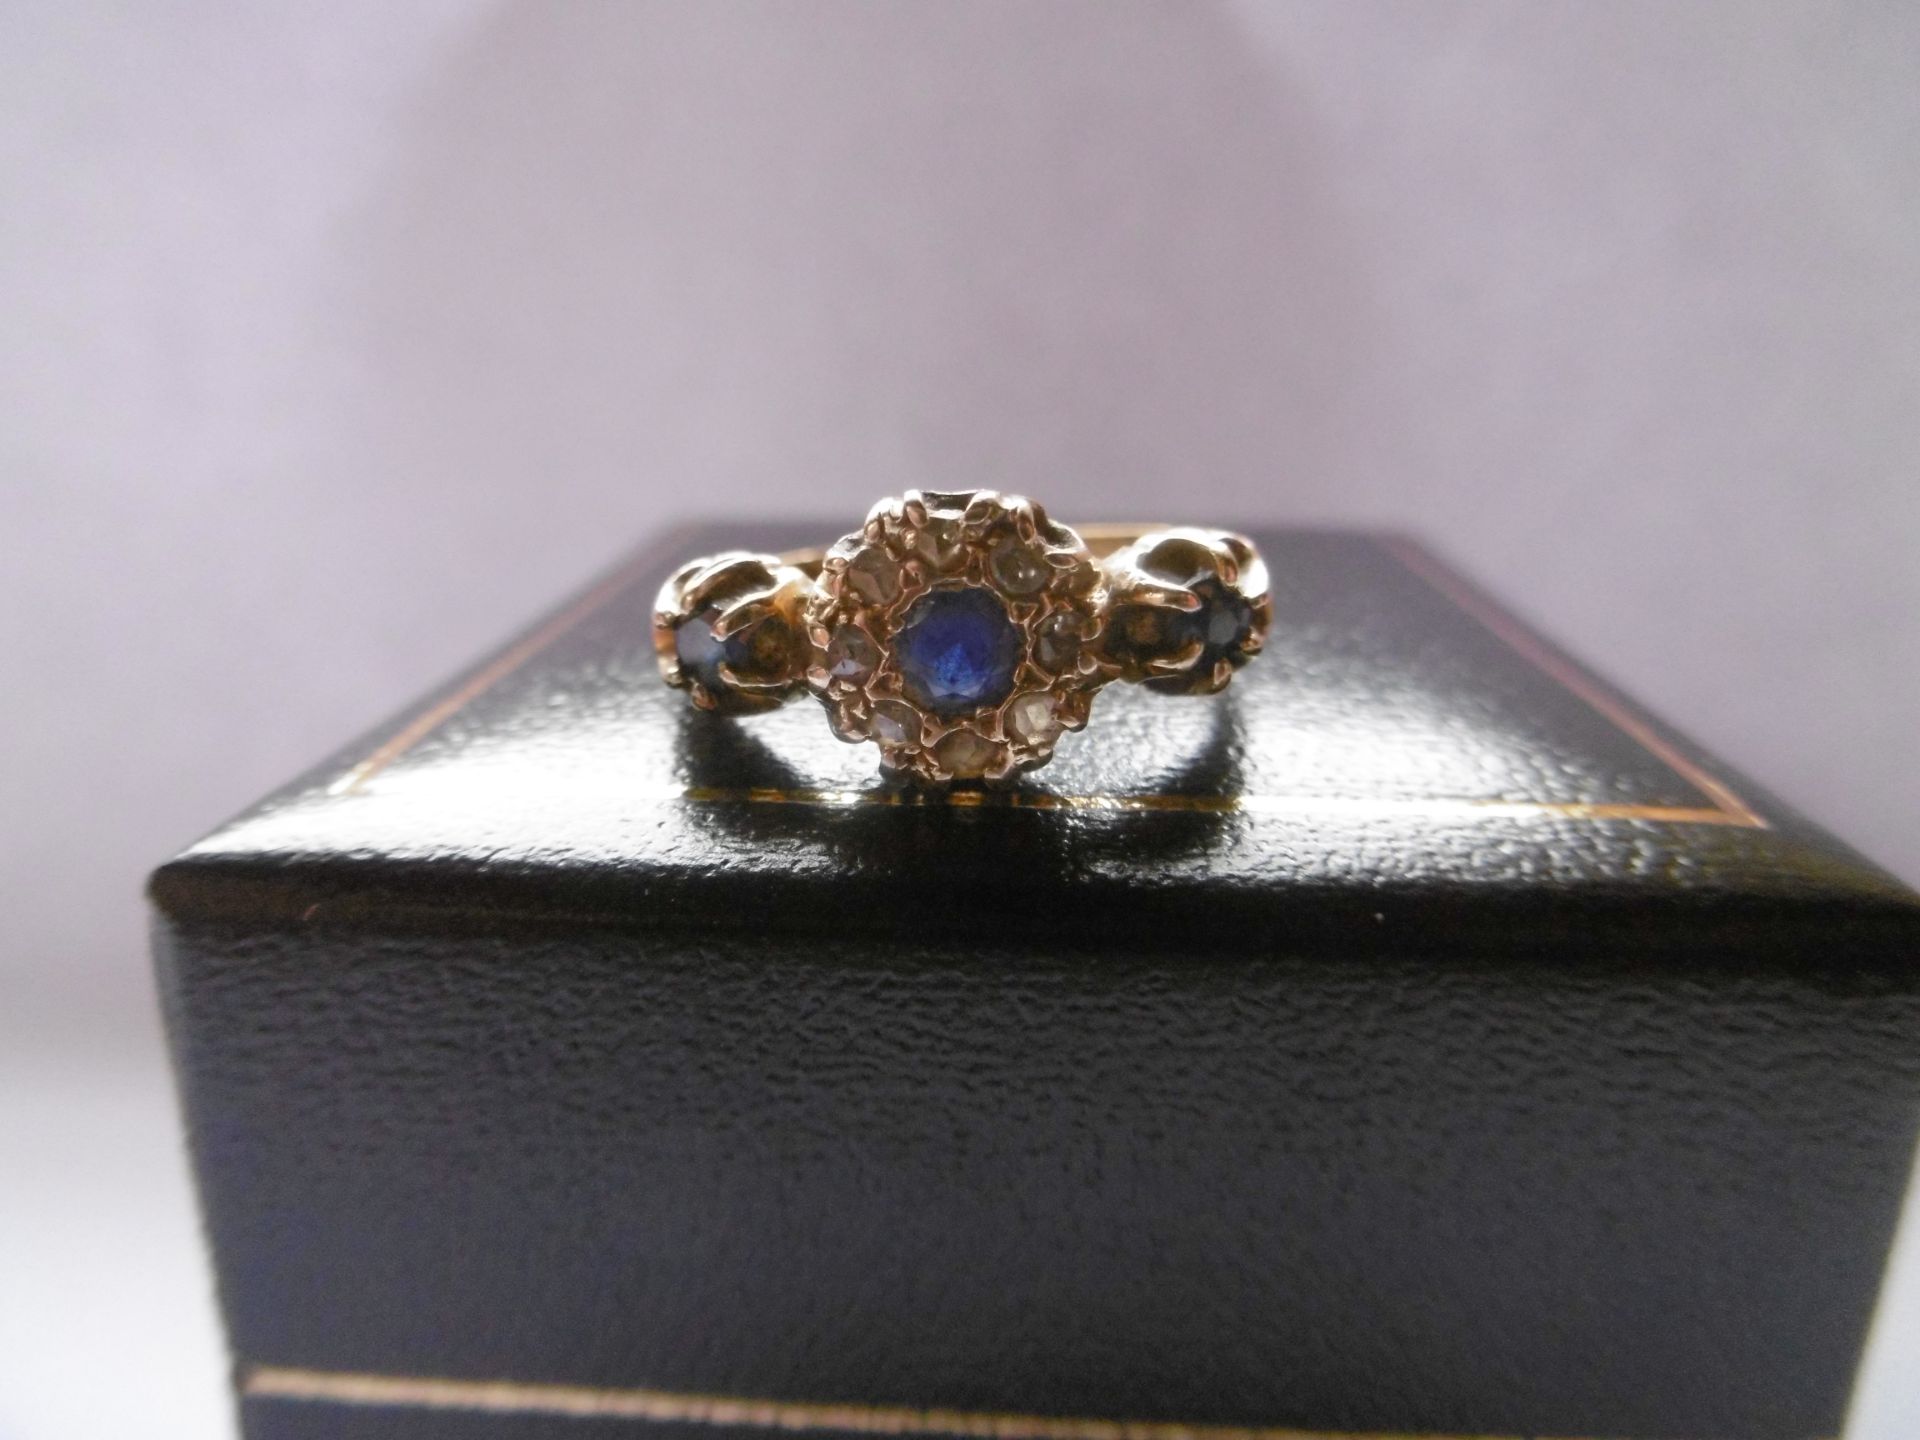 Kashmir Sapphire and Diamond ring - Image 2 of 3